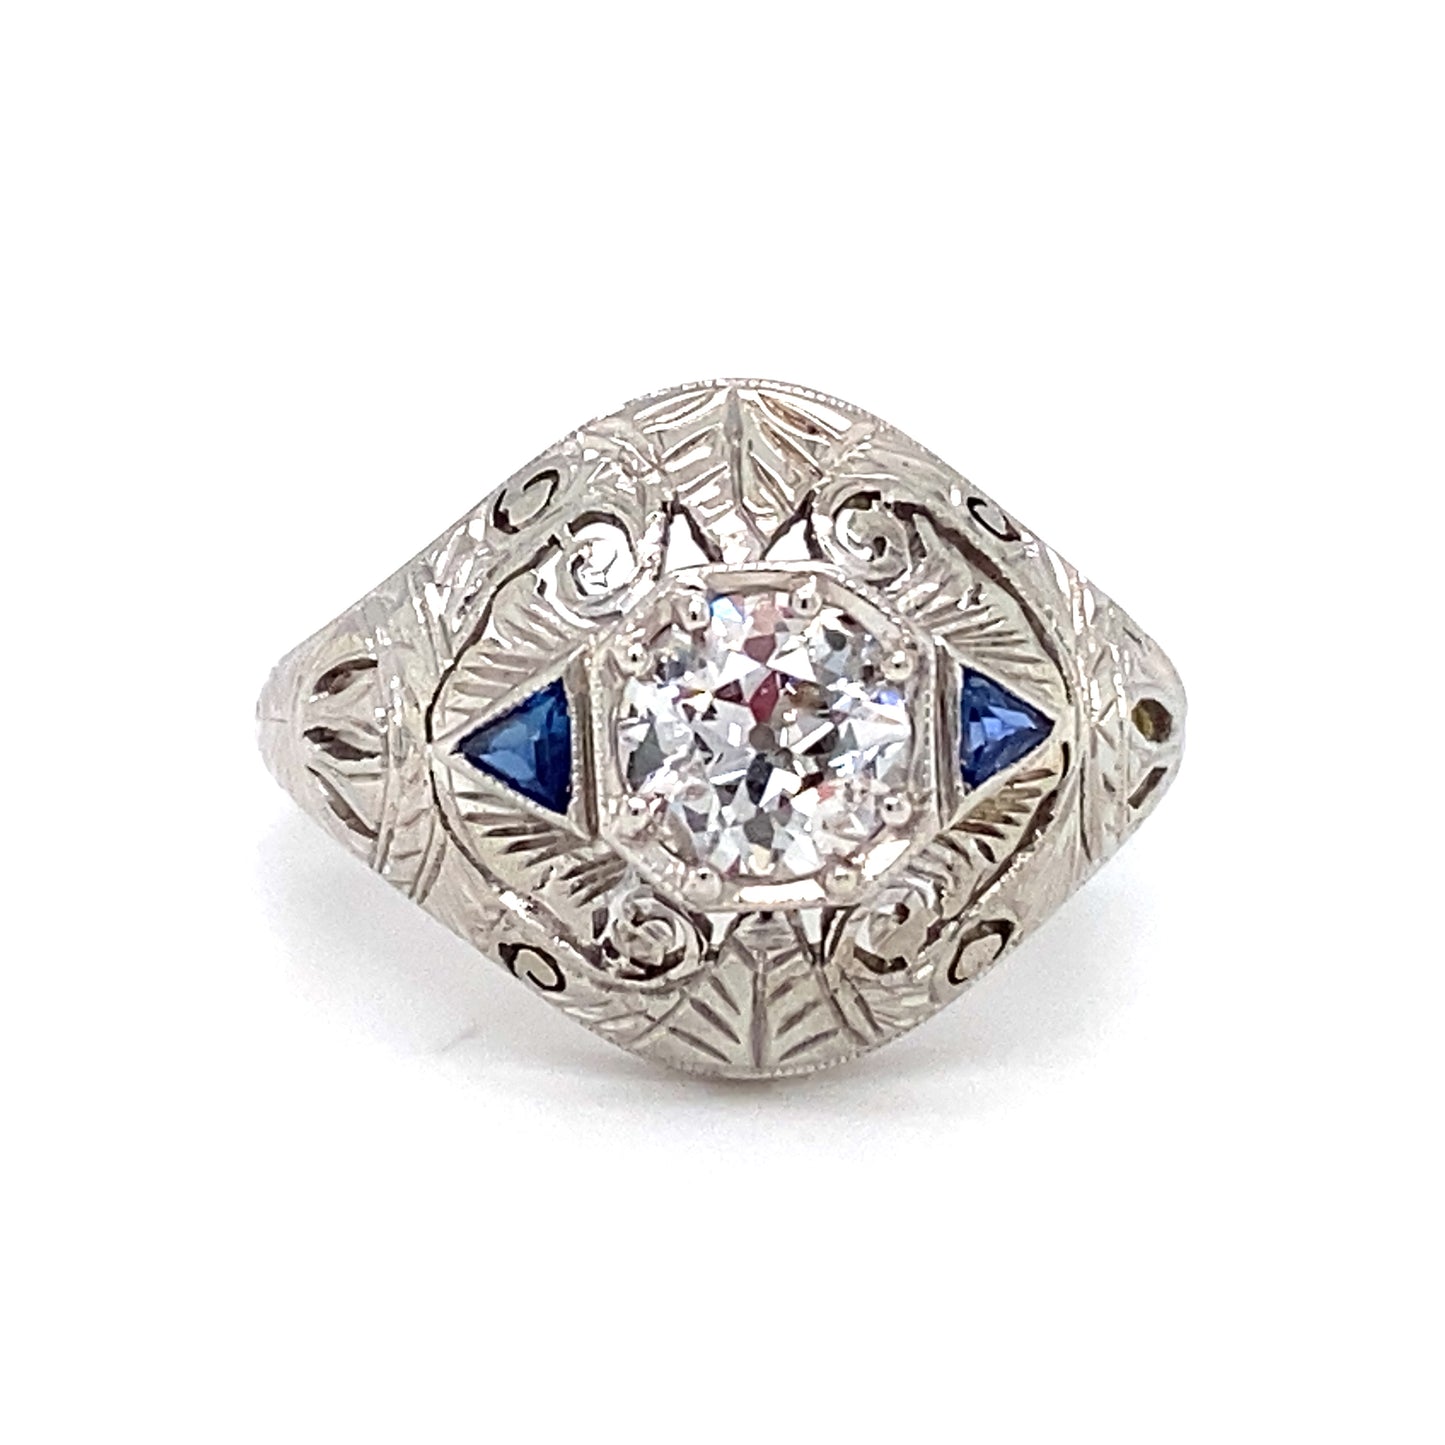 Circa 1920s Art Deco 0.65ct Diamond and Sapphire Ring in Platinum